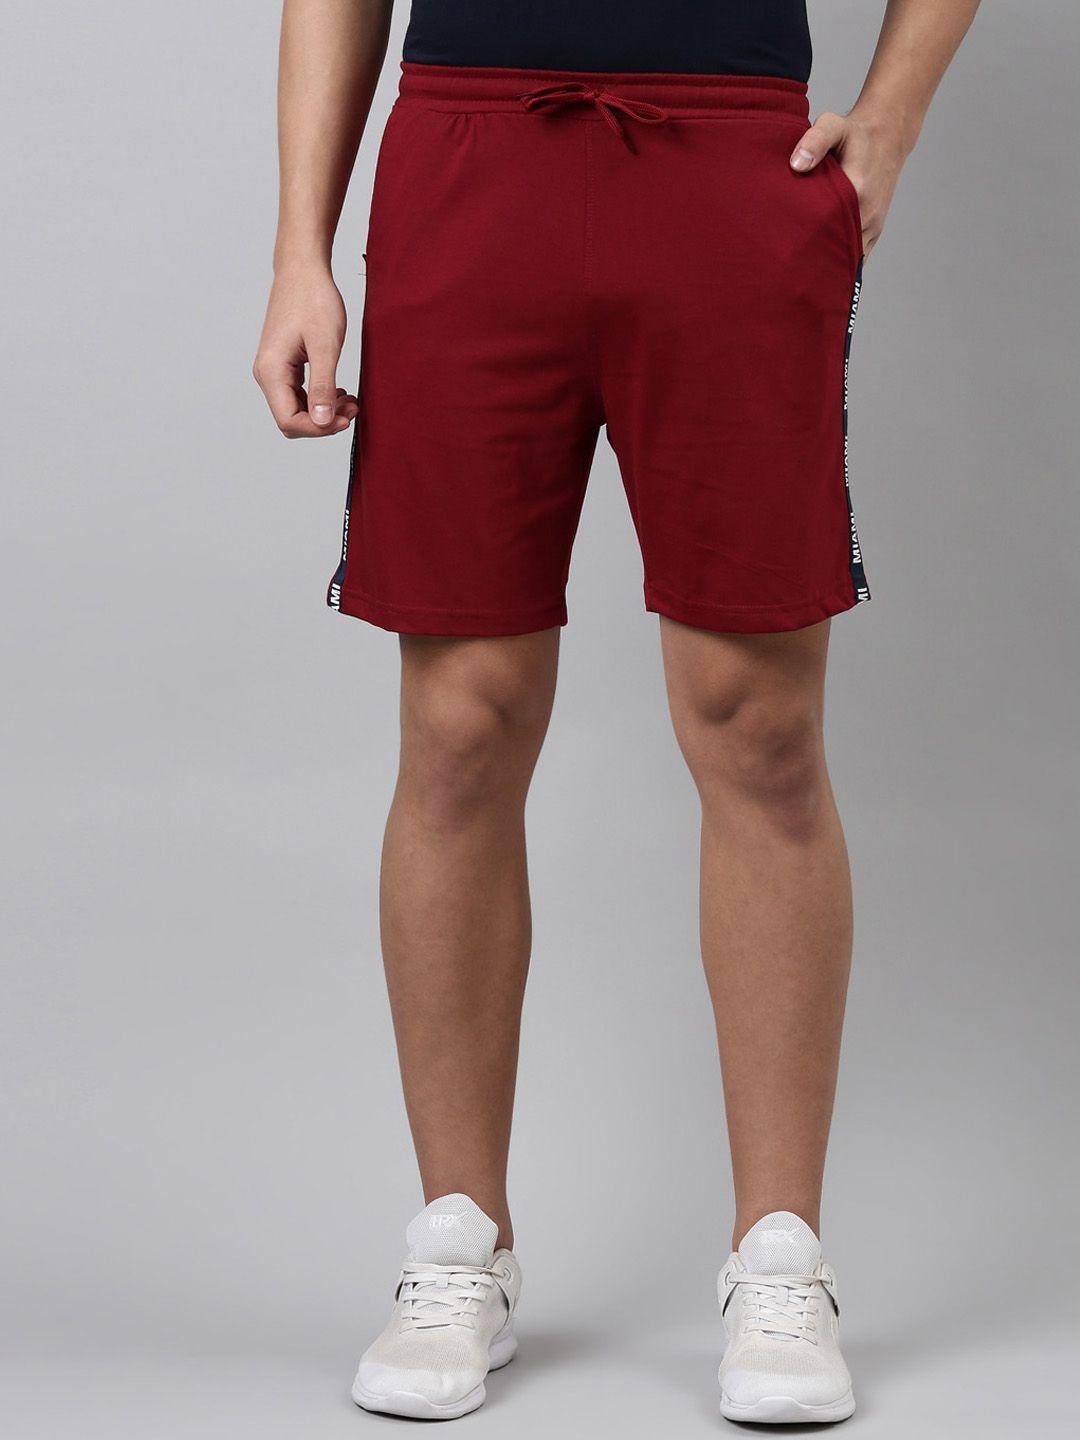 dixcy scott men red sports shorts